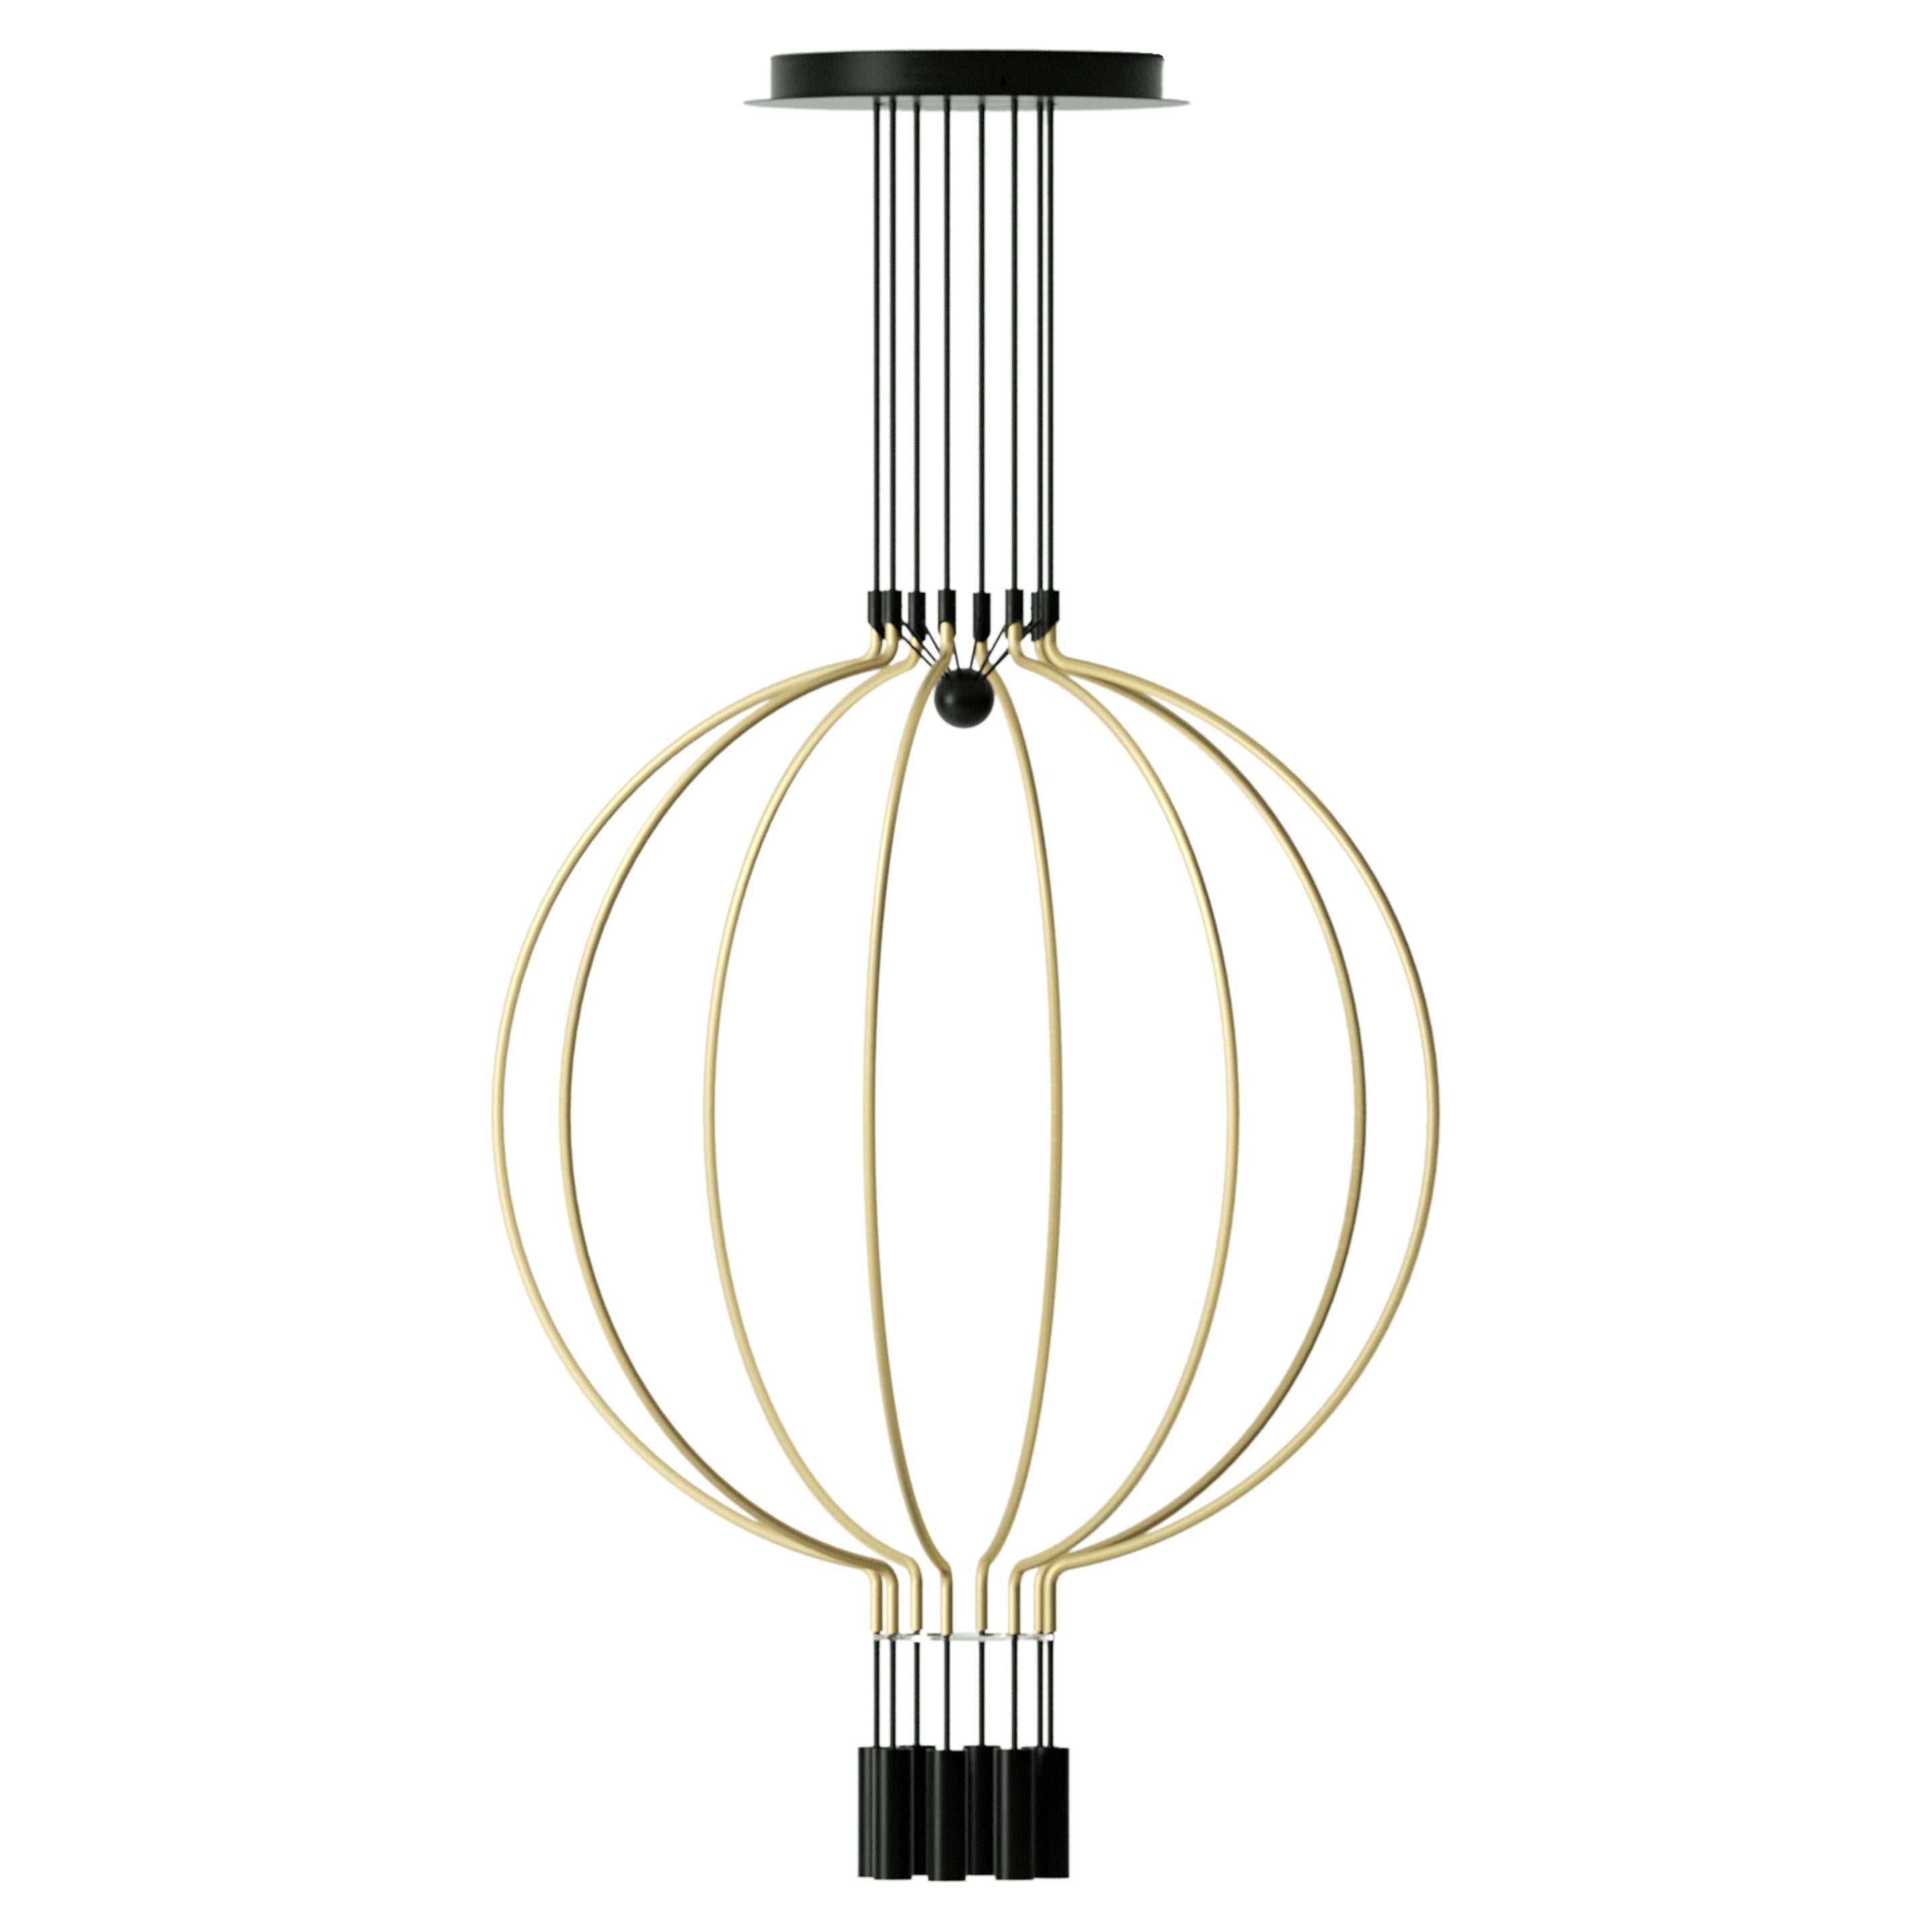 Axolight Liaison Model M8 Pendant Lamp in Gold/Black by Sara Moroni